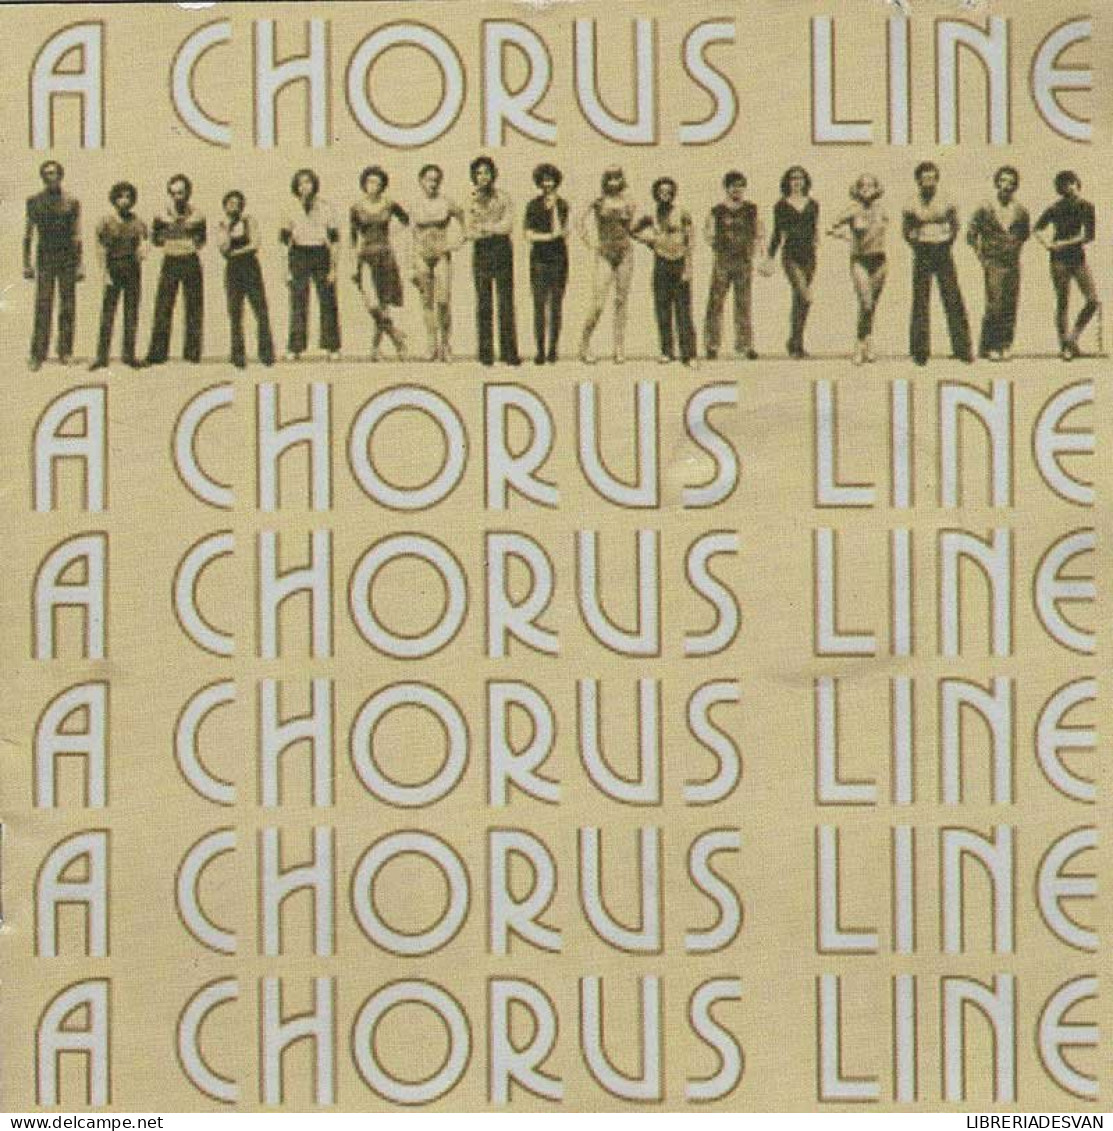 A Chorus Line - Original Broadway Cast Recording. CD - Musica Di Film